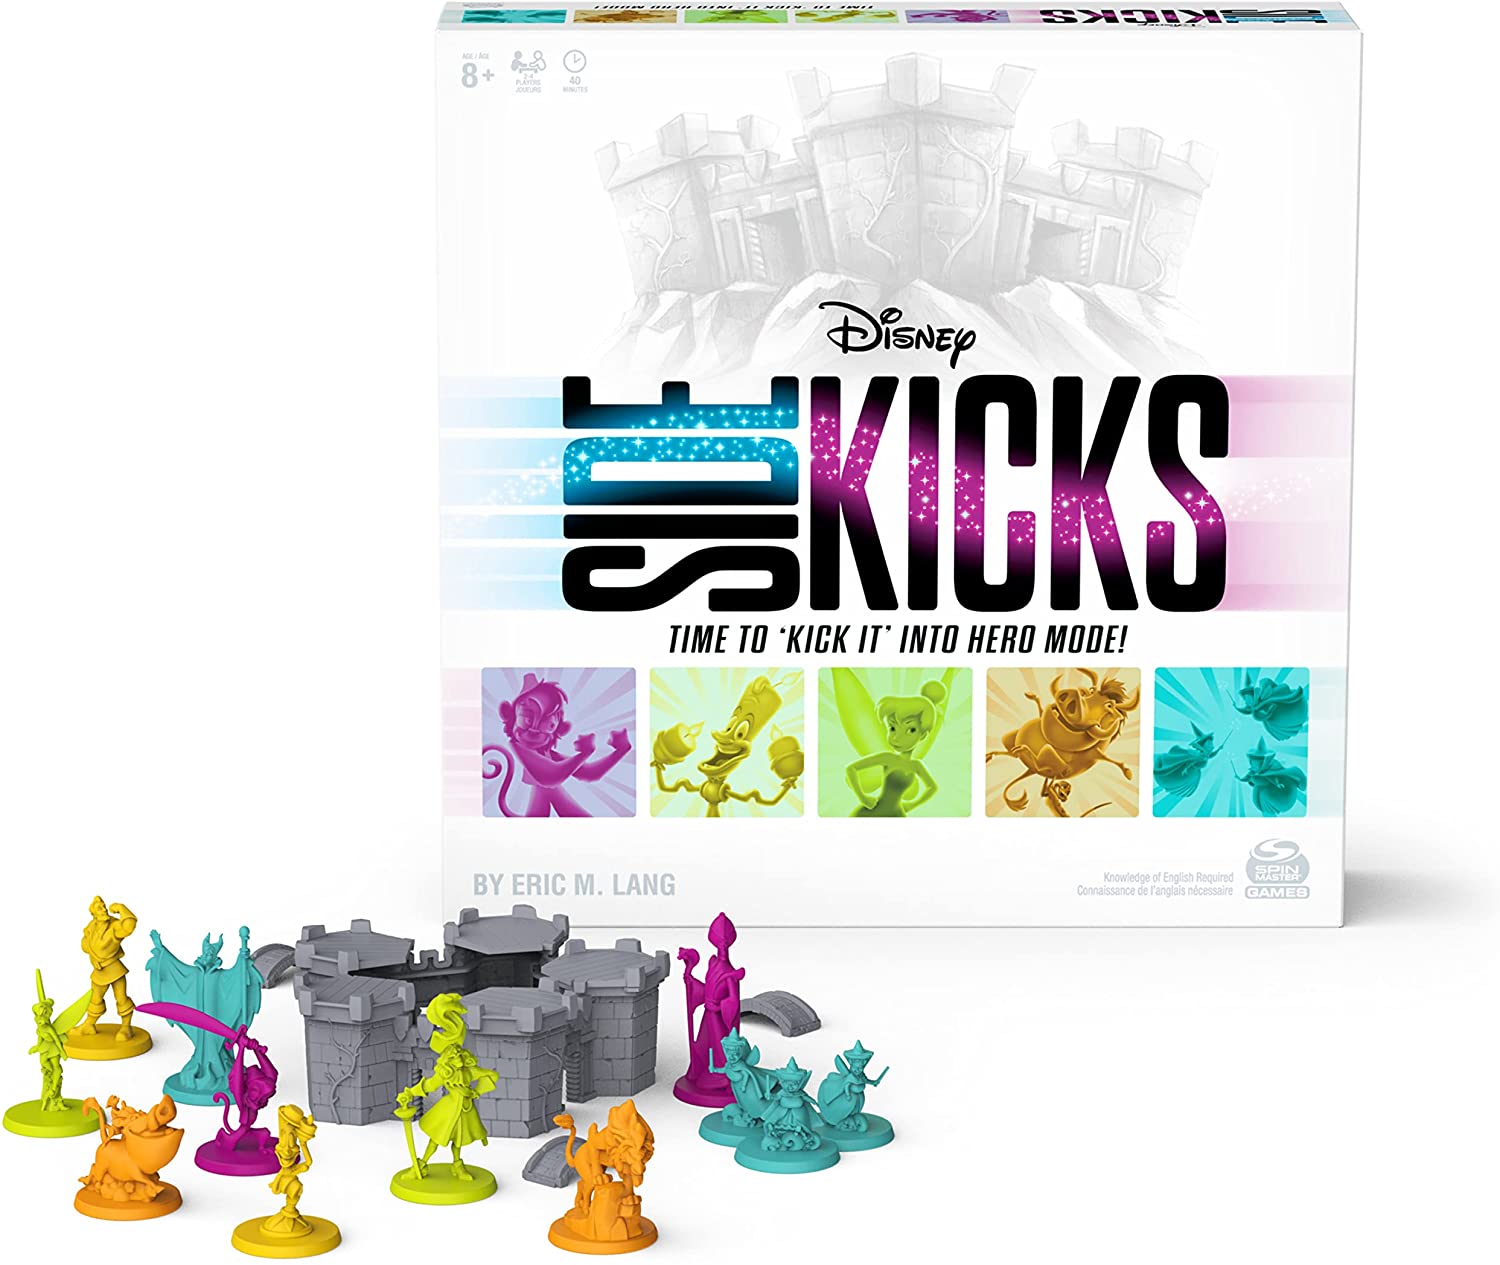 Disney Sidekicks Cooperative Strategy Board Game $11 + FS w/ Amazon Prime or FS on $25+